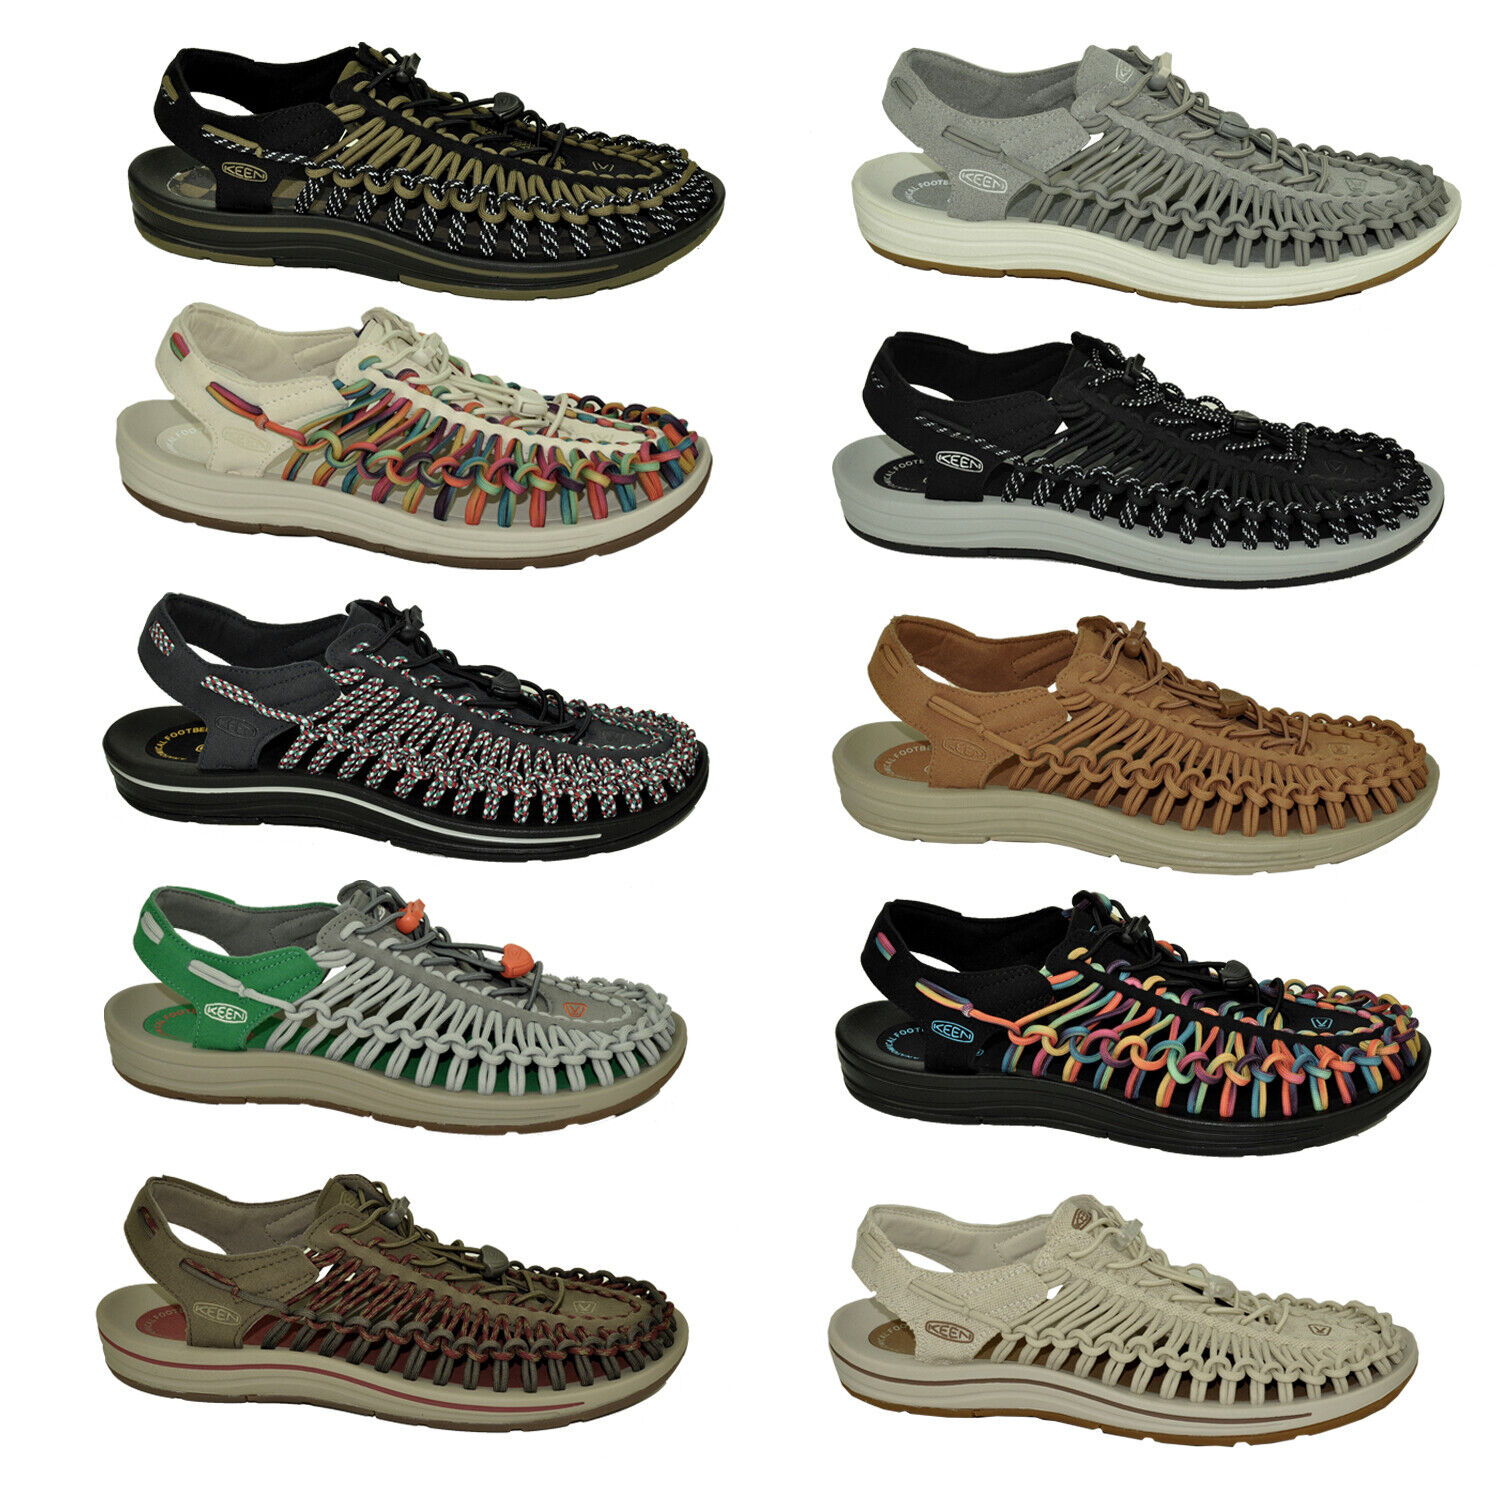 KEEN Uneek Sandalen Trekkingsandalen Ultra Leicht Leder Canvas Herren Sneaker Modell - Farbe 1026340 - Olive Schuhgröße EUR 43 - UK 9 - US 10